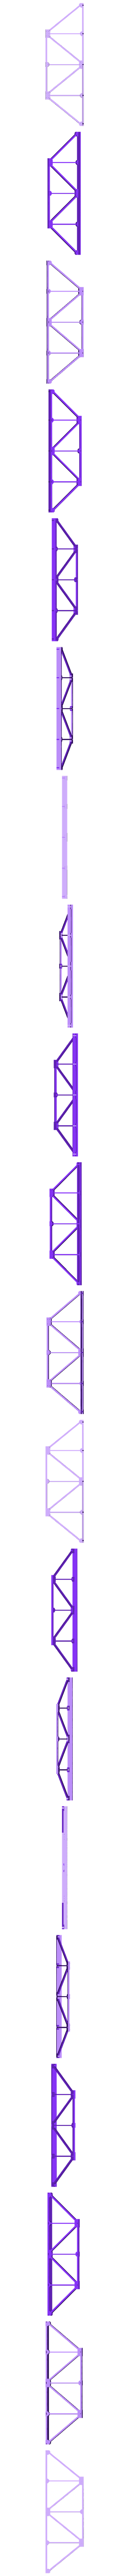 Side_1.stl Download free STL file HO scale railway bridge • 3D printing object, positron